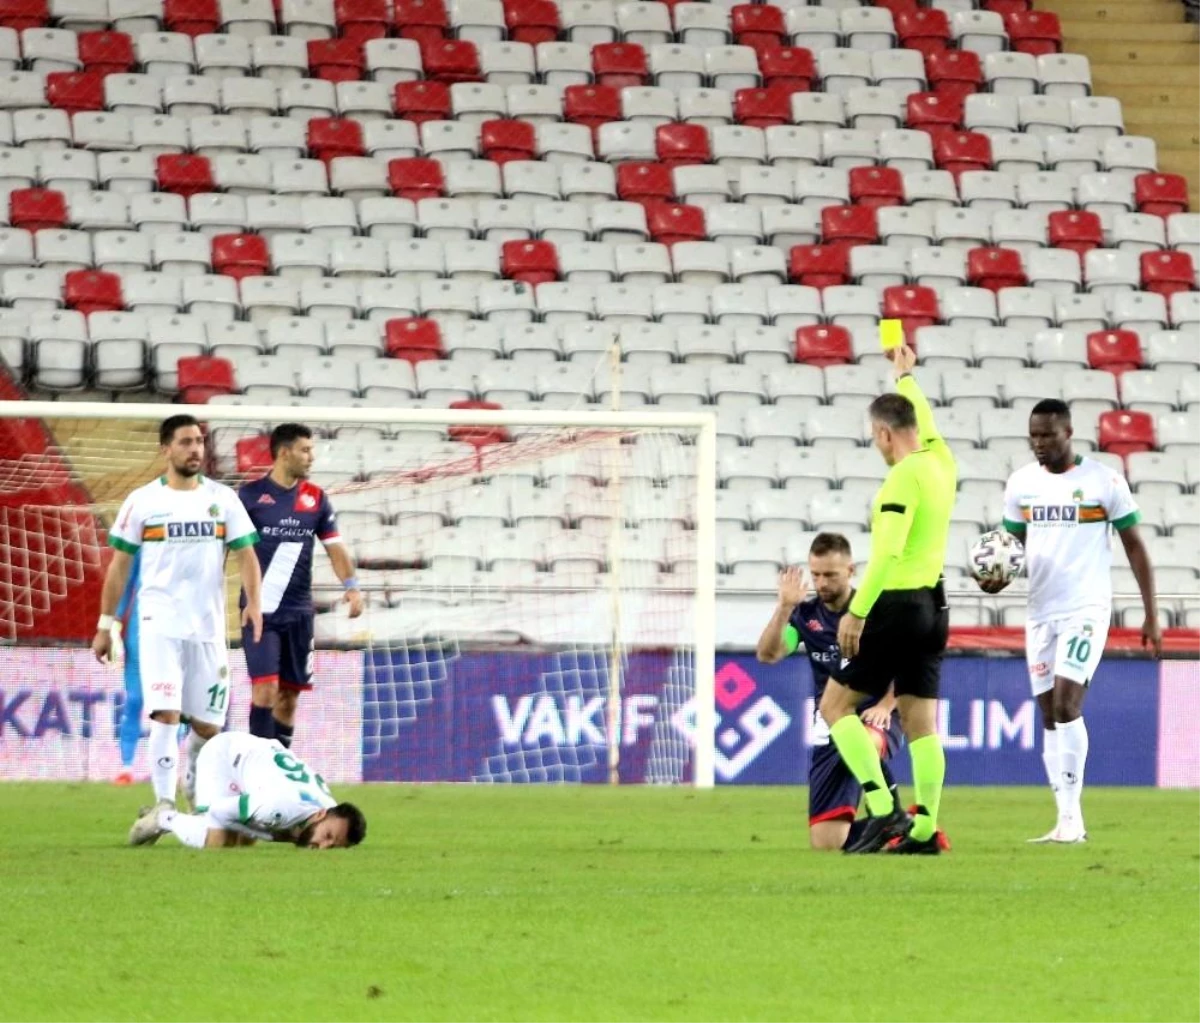 Süper Lig: Fraport TAV Antalyaspor: 0 - Aytemiz Alanyaspor: 2 (Maç sonucu)